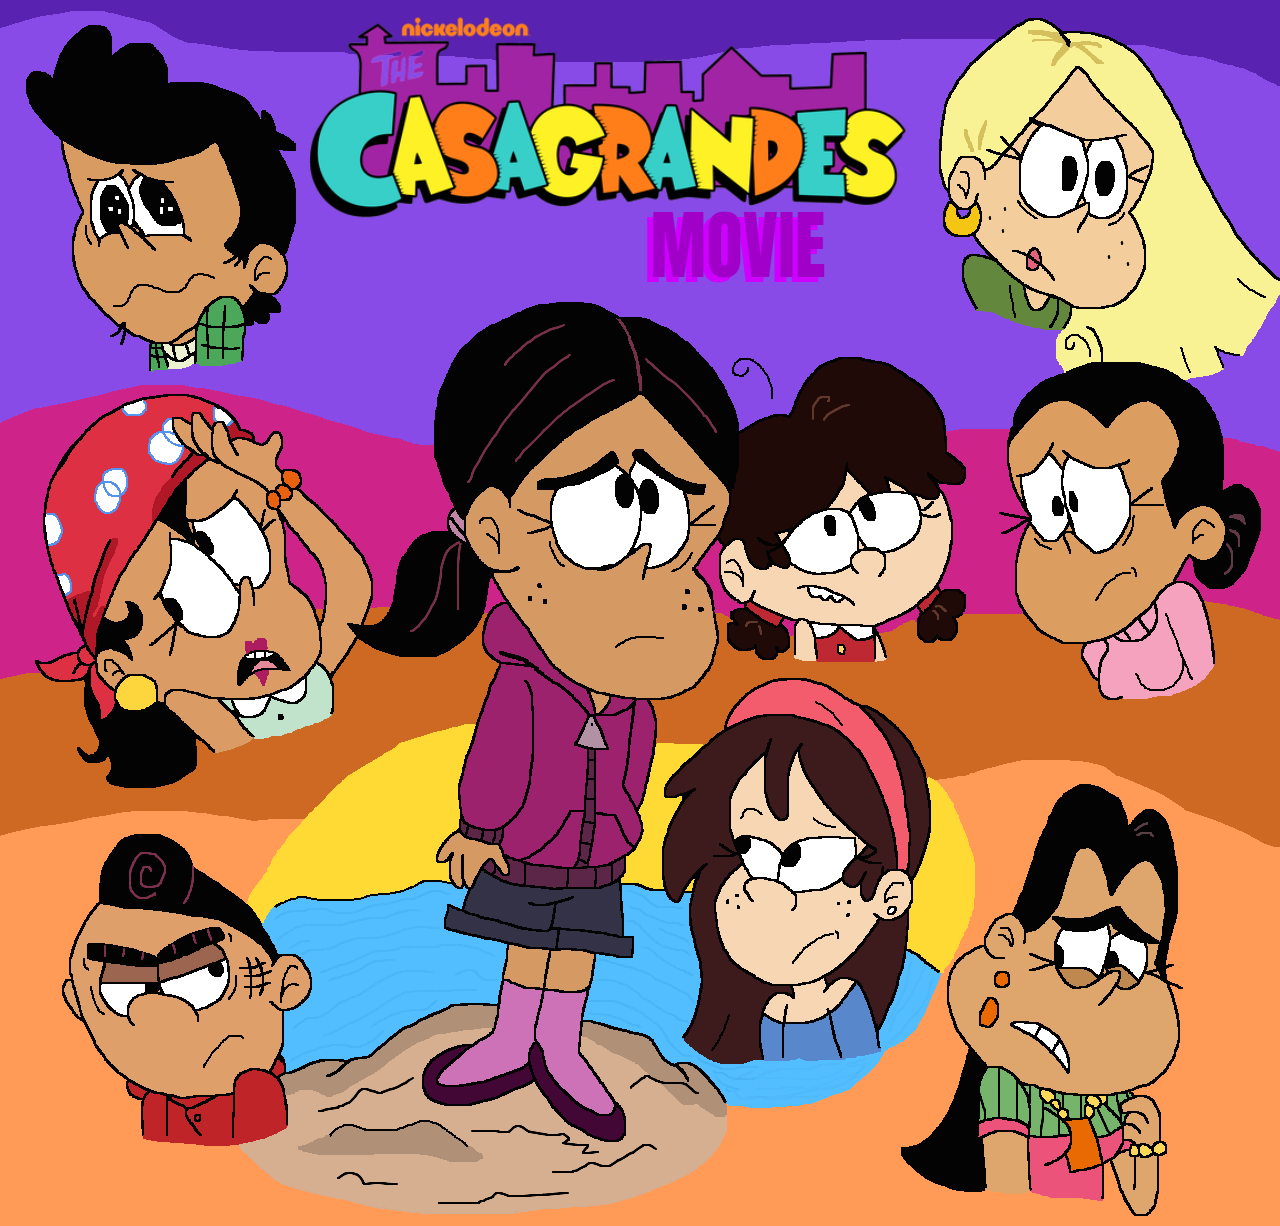 The Casagrandes Movie Poster by lileehilee on DeviantArt